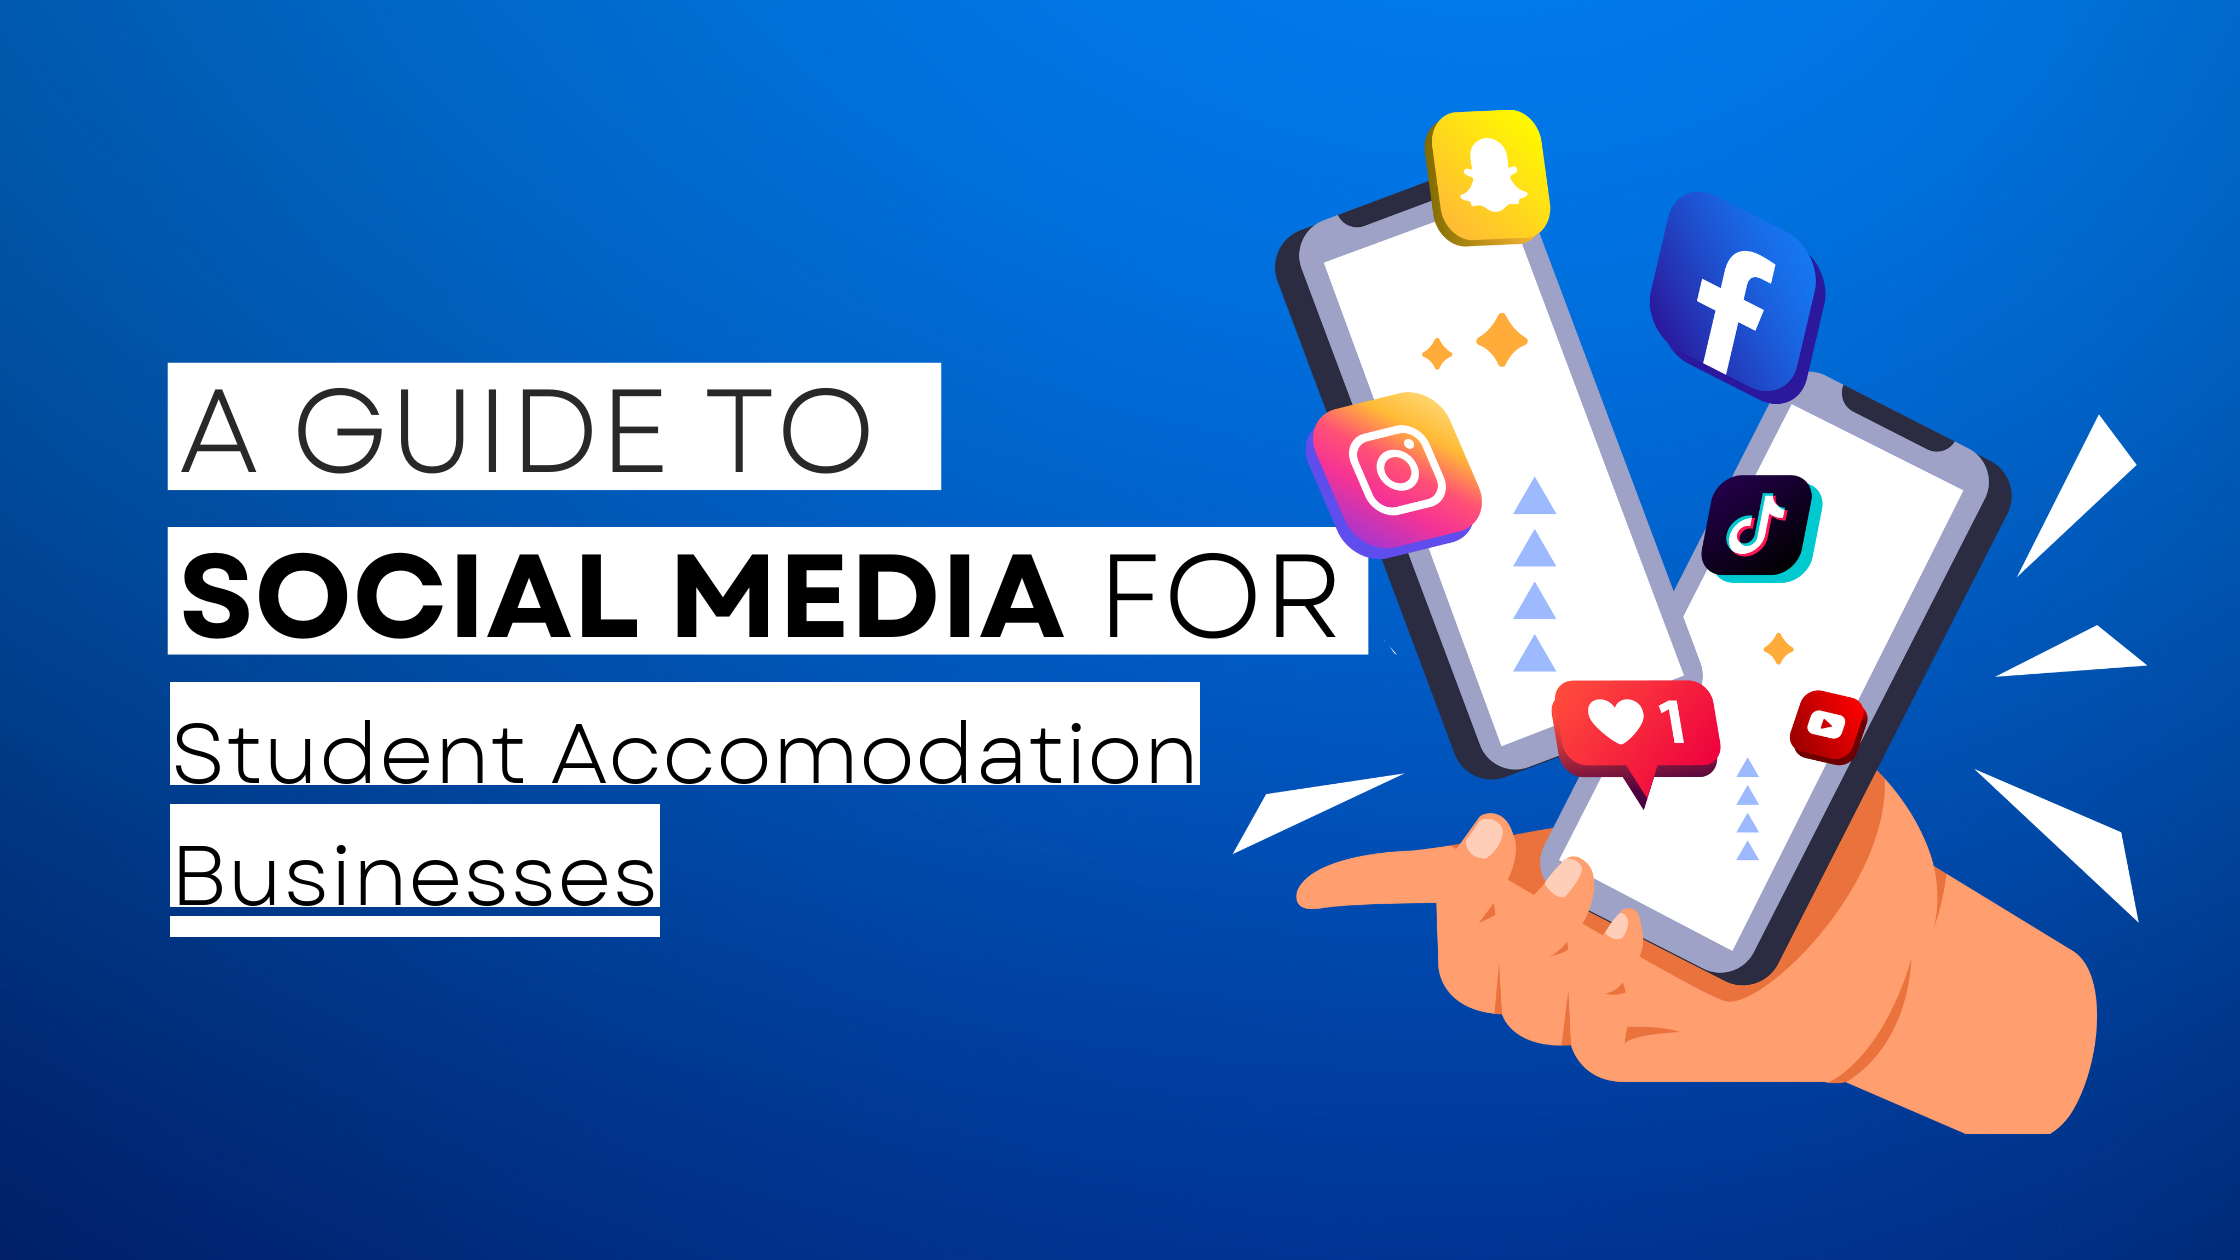 How to start Student Accomodation on social media